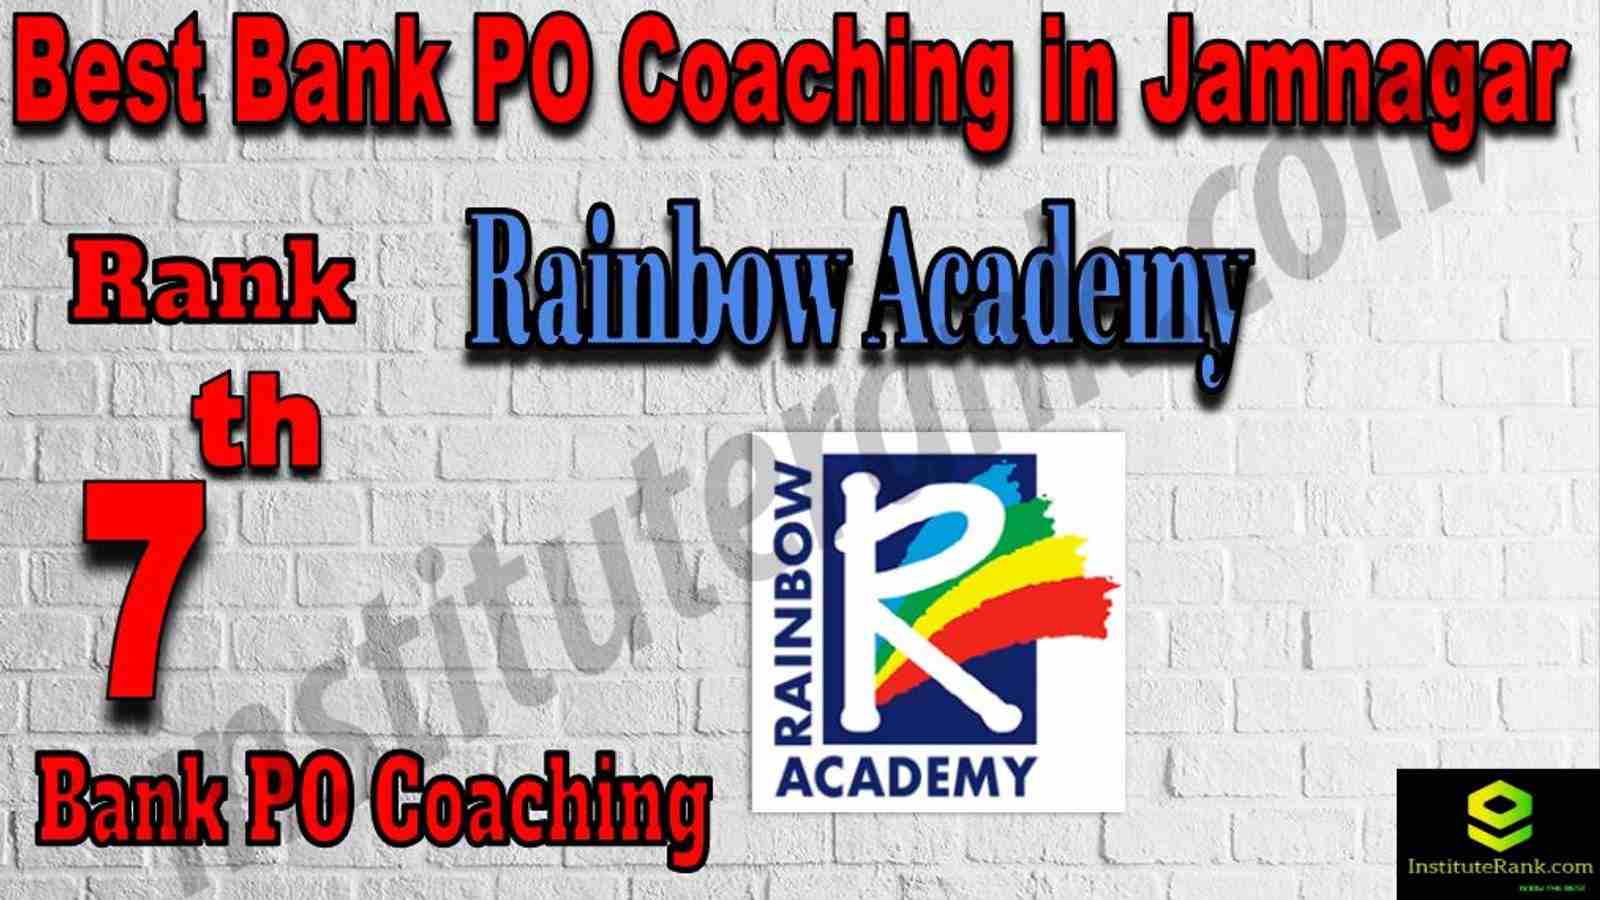 7th Best Bank PO Coaching in Jamnagar